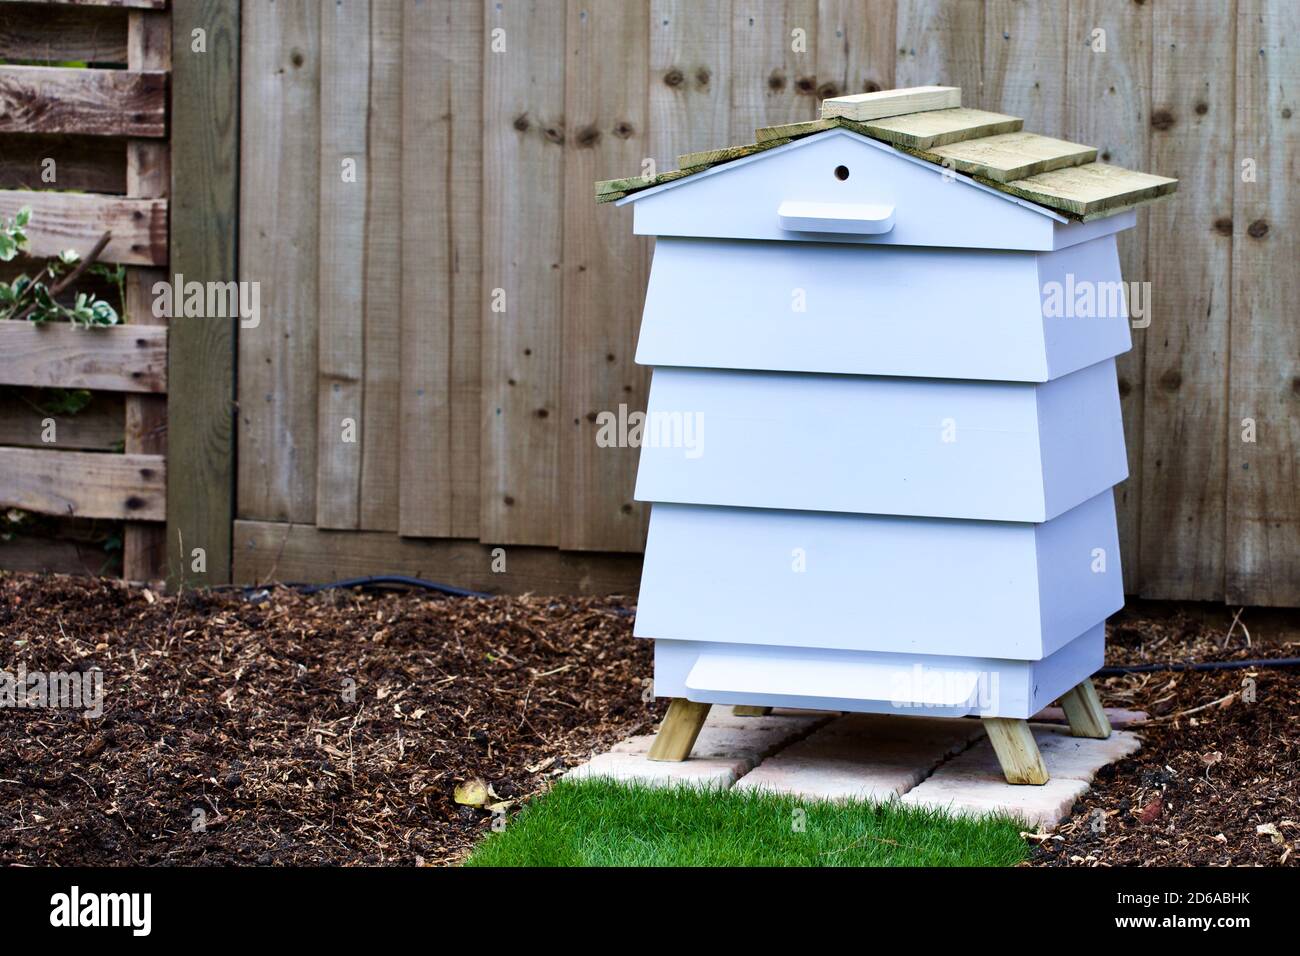 Beehive Style Garden Storage Stock Photo